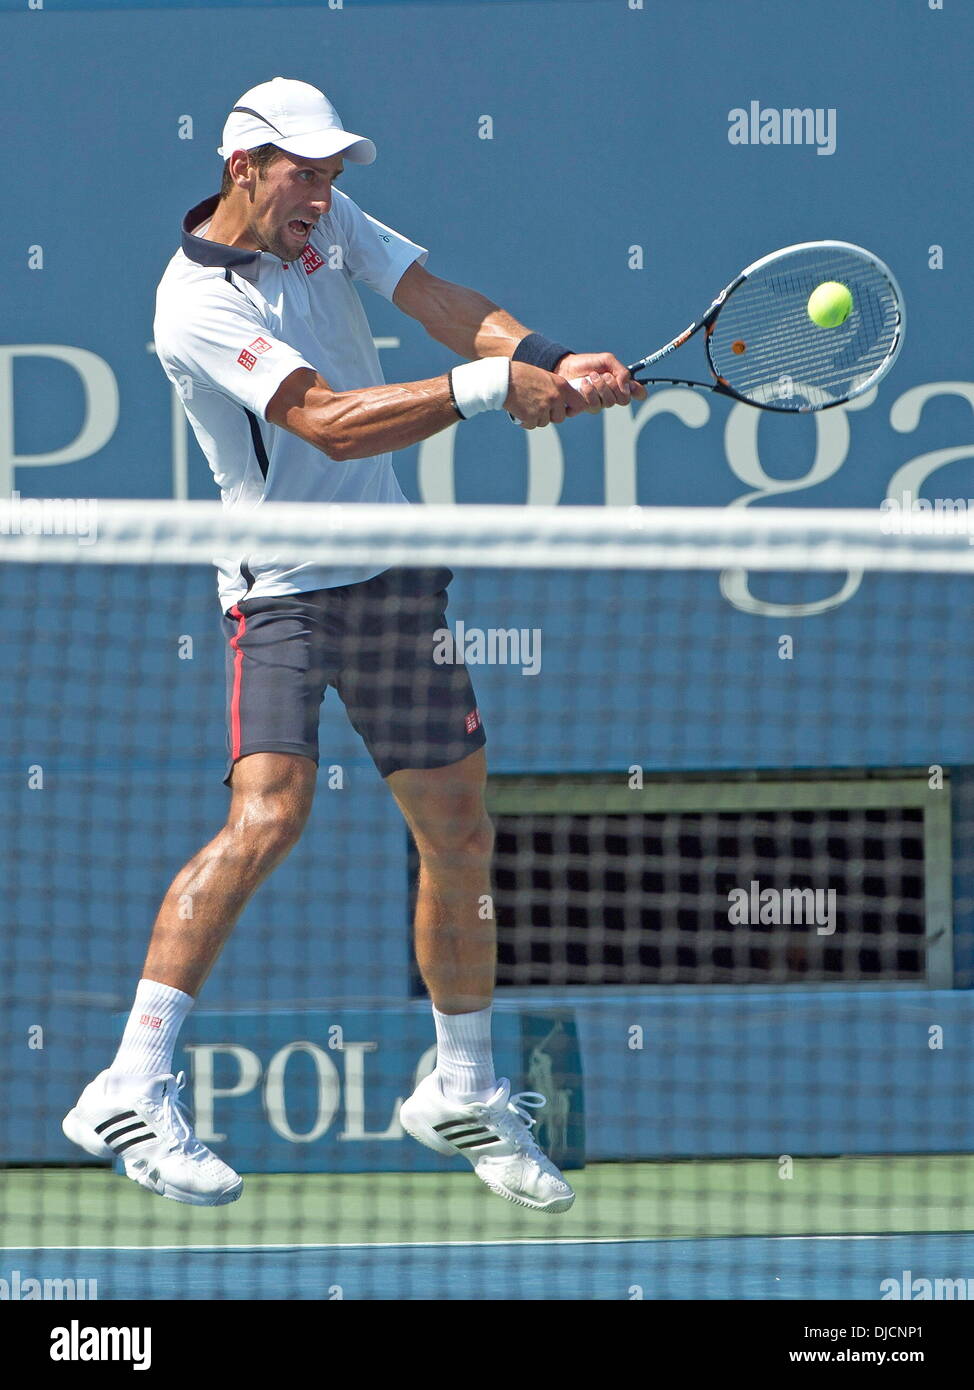 Novak Djokovic US Open 2012 Men's Match - Novak Djokovic Vs Rogerio Dutra Silva - USTA Billie Jean King National Tennis Center. Djokovic bat Silva 6-2, 6-1, 6-2 New York City, USA - 31.08.12 Banque D'Images